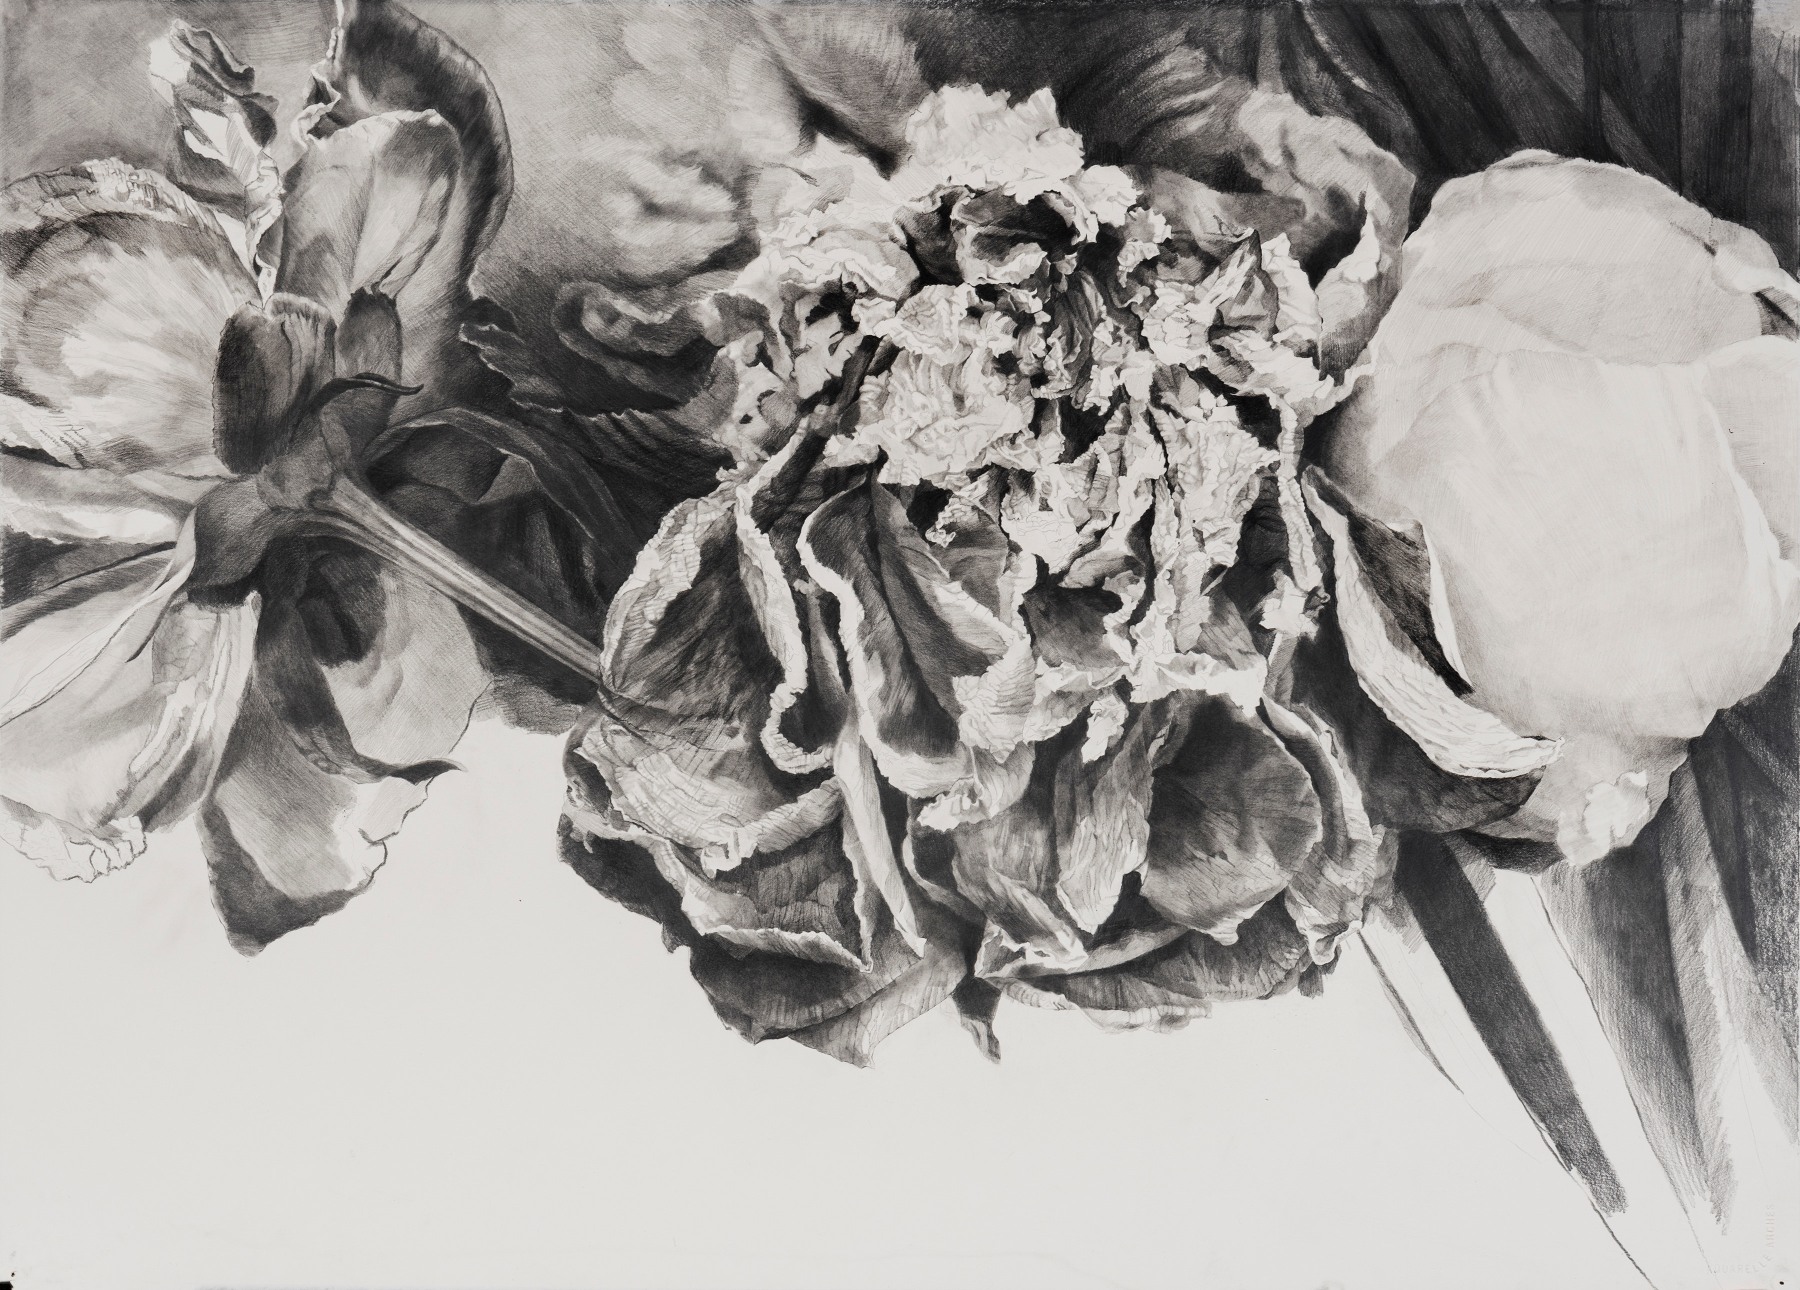 Dead Flowers 1, graphite on paper, 26 1/4 x 36 in, JR037